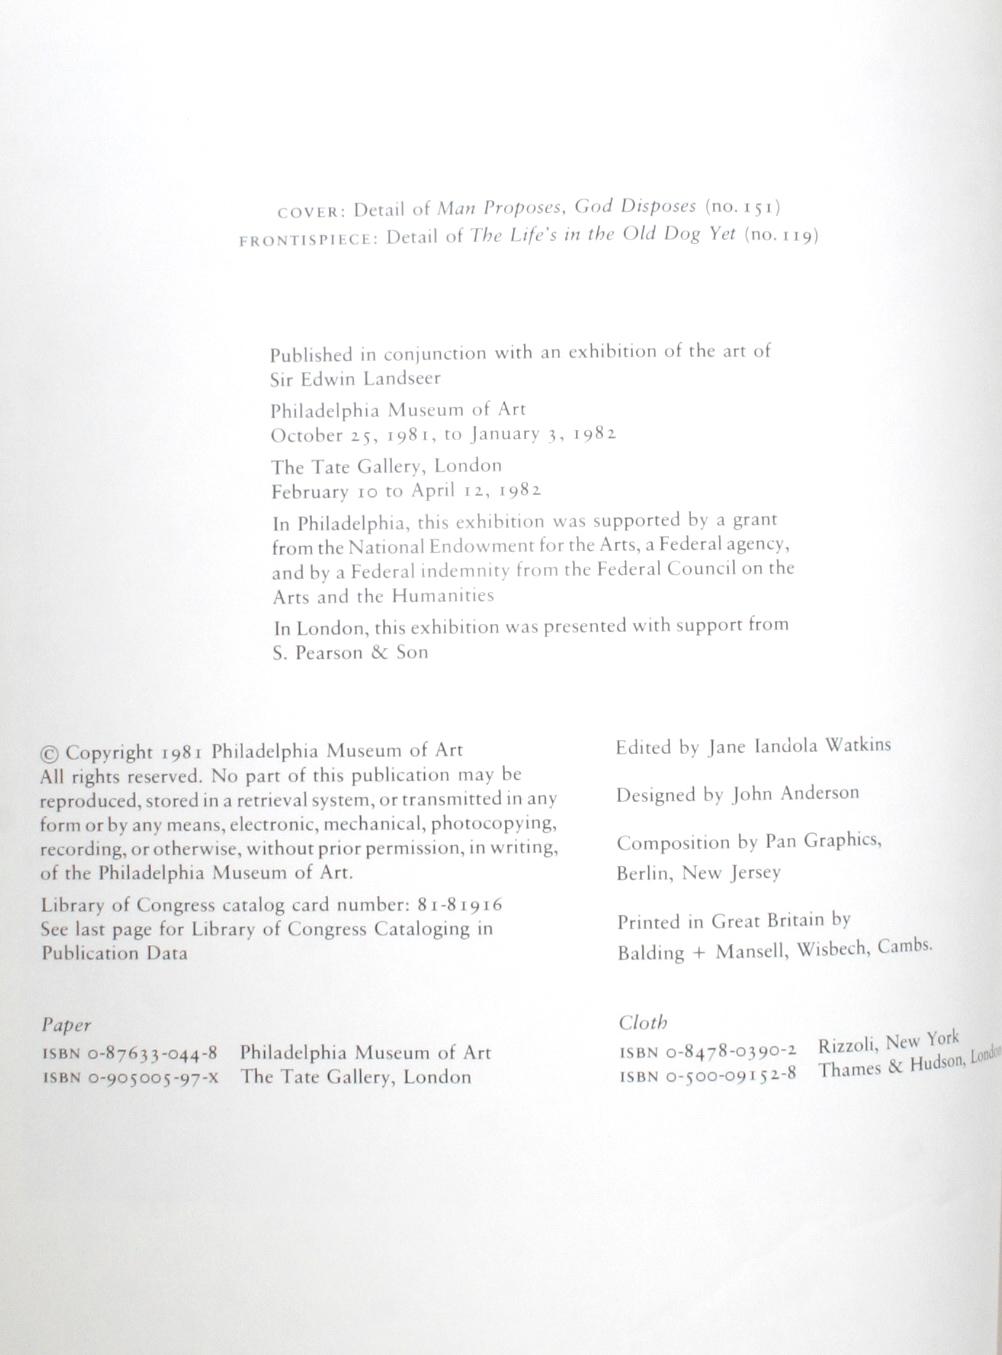 Sir Edwin Landseer, Exhibition Catalogue by Richard Ormond 11